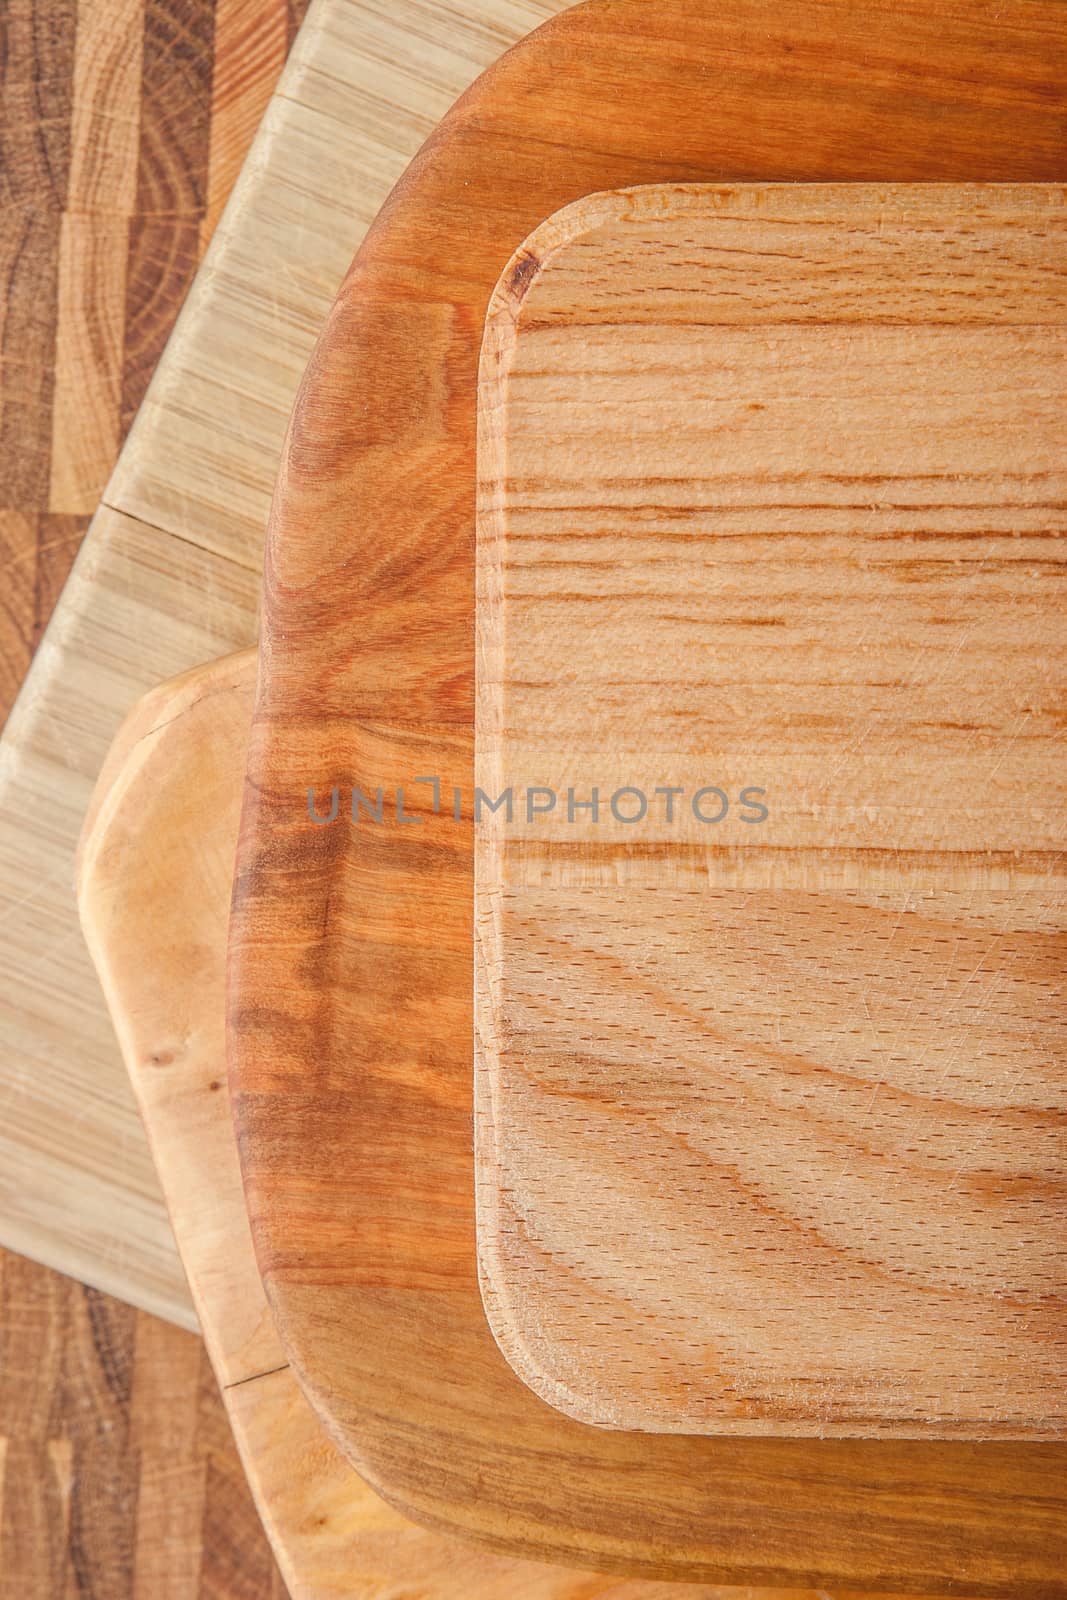 Set of wooden kitchen board vertical